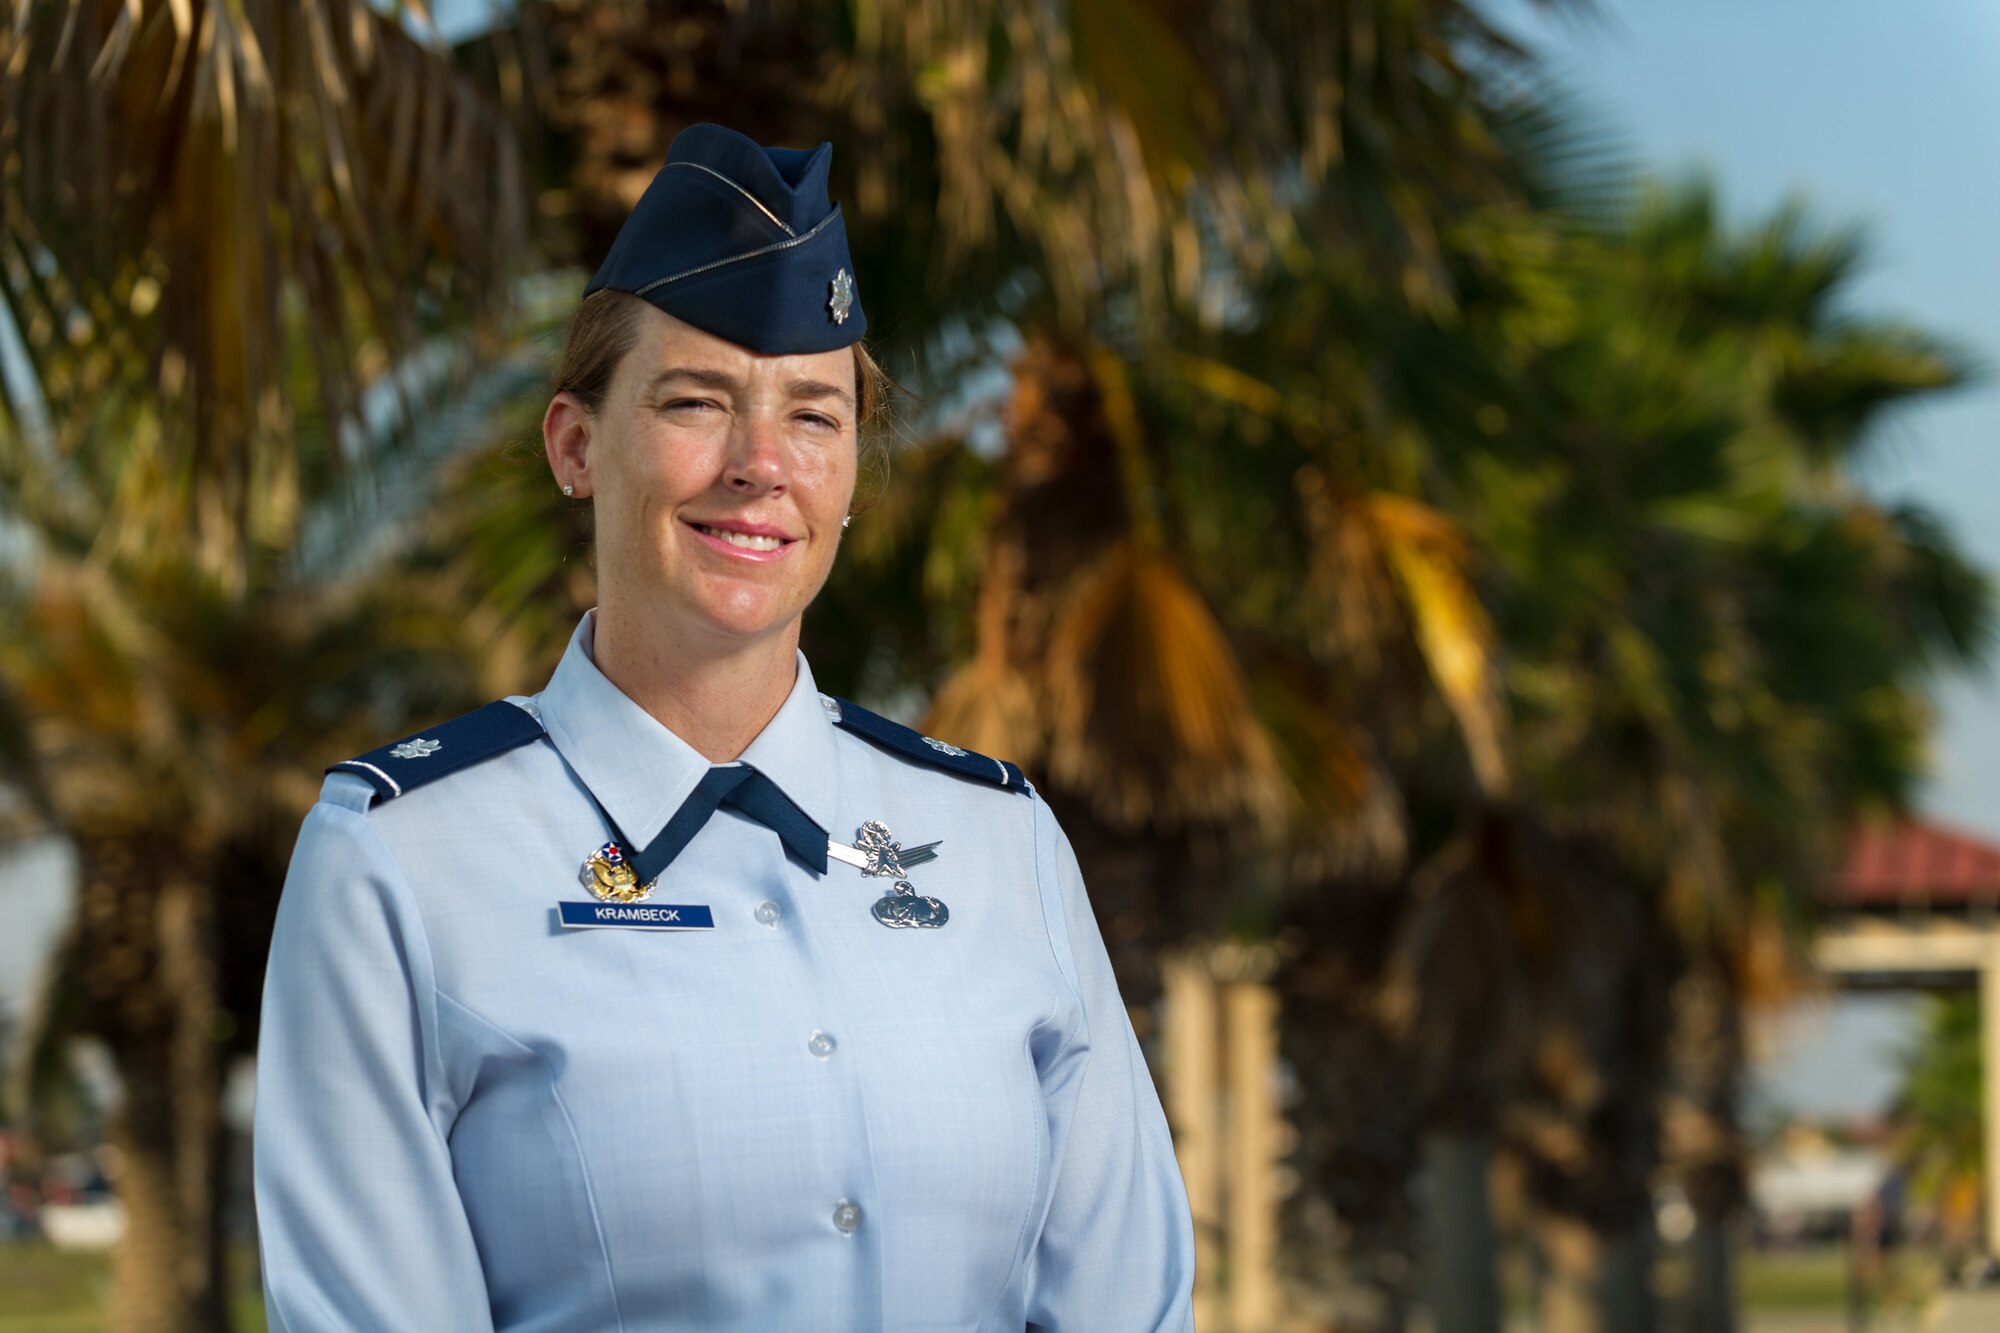 Lt. Col. Melissa Krambeck,
Air Force Technical Applications Center
